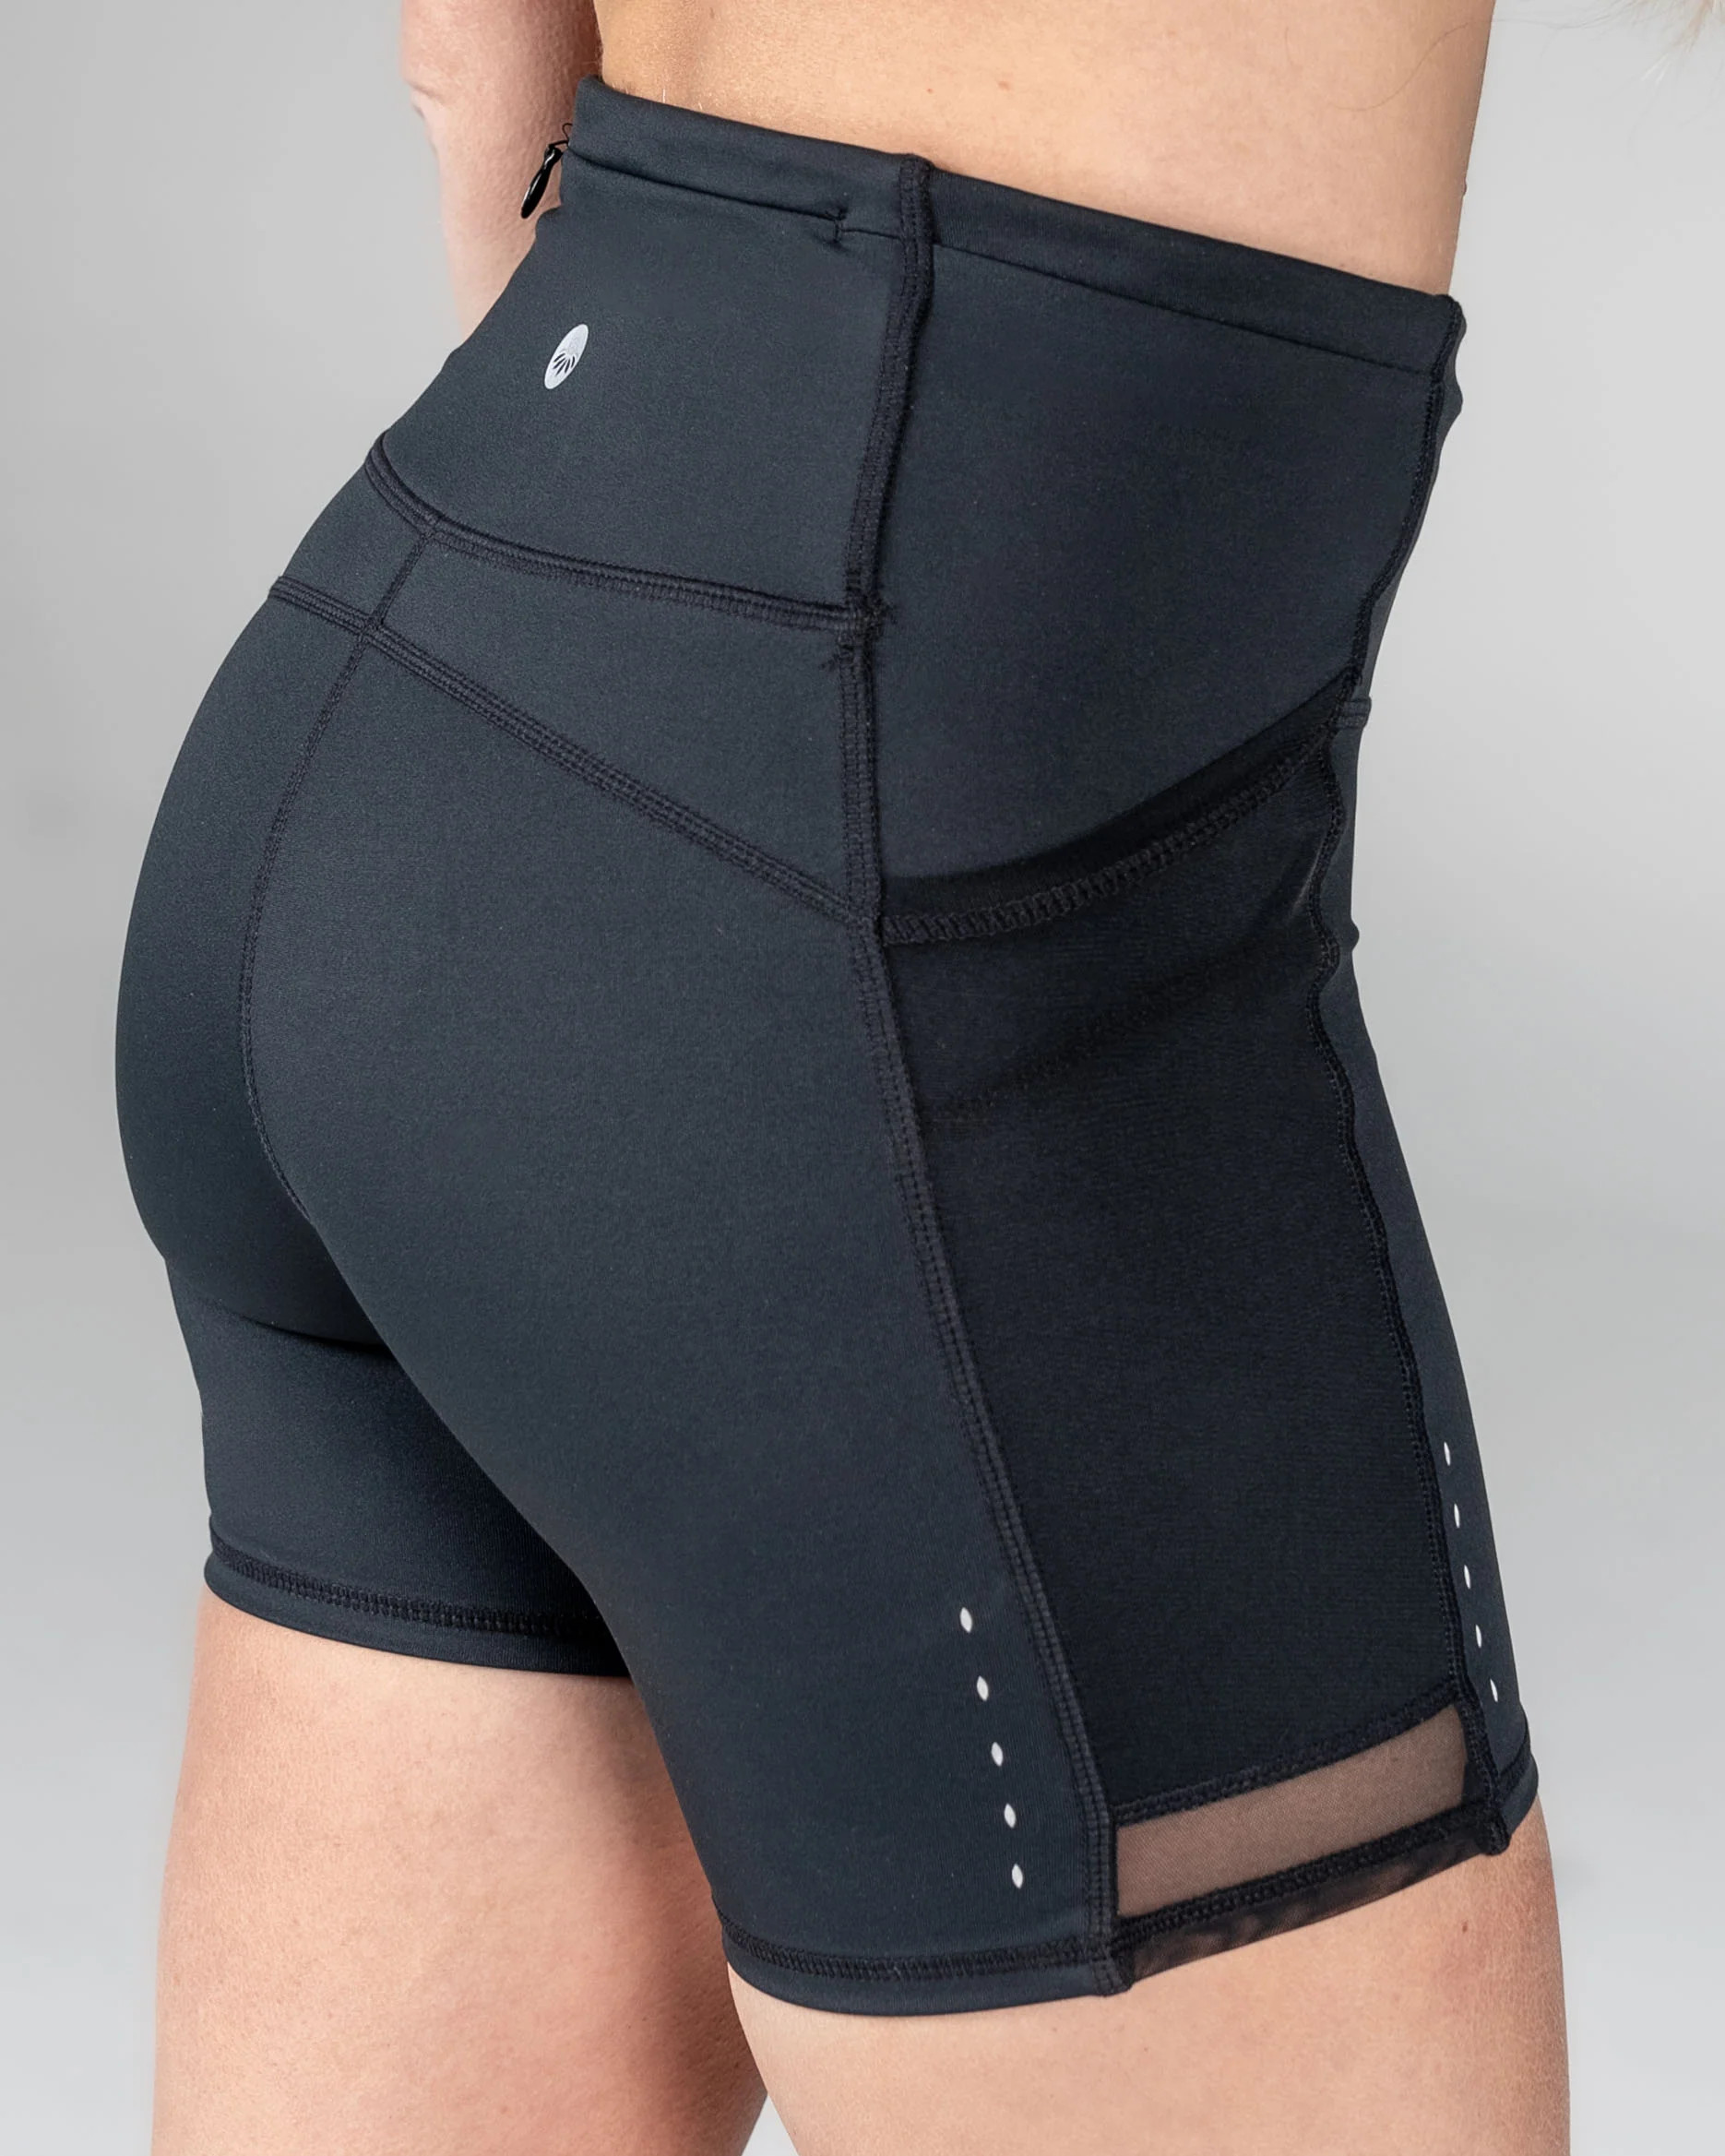 Lux Ultra Mesh Shorts (5 in. inseam) - Black | Senita Athletics